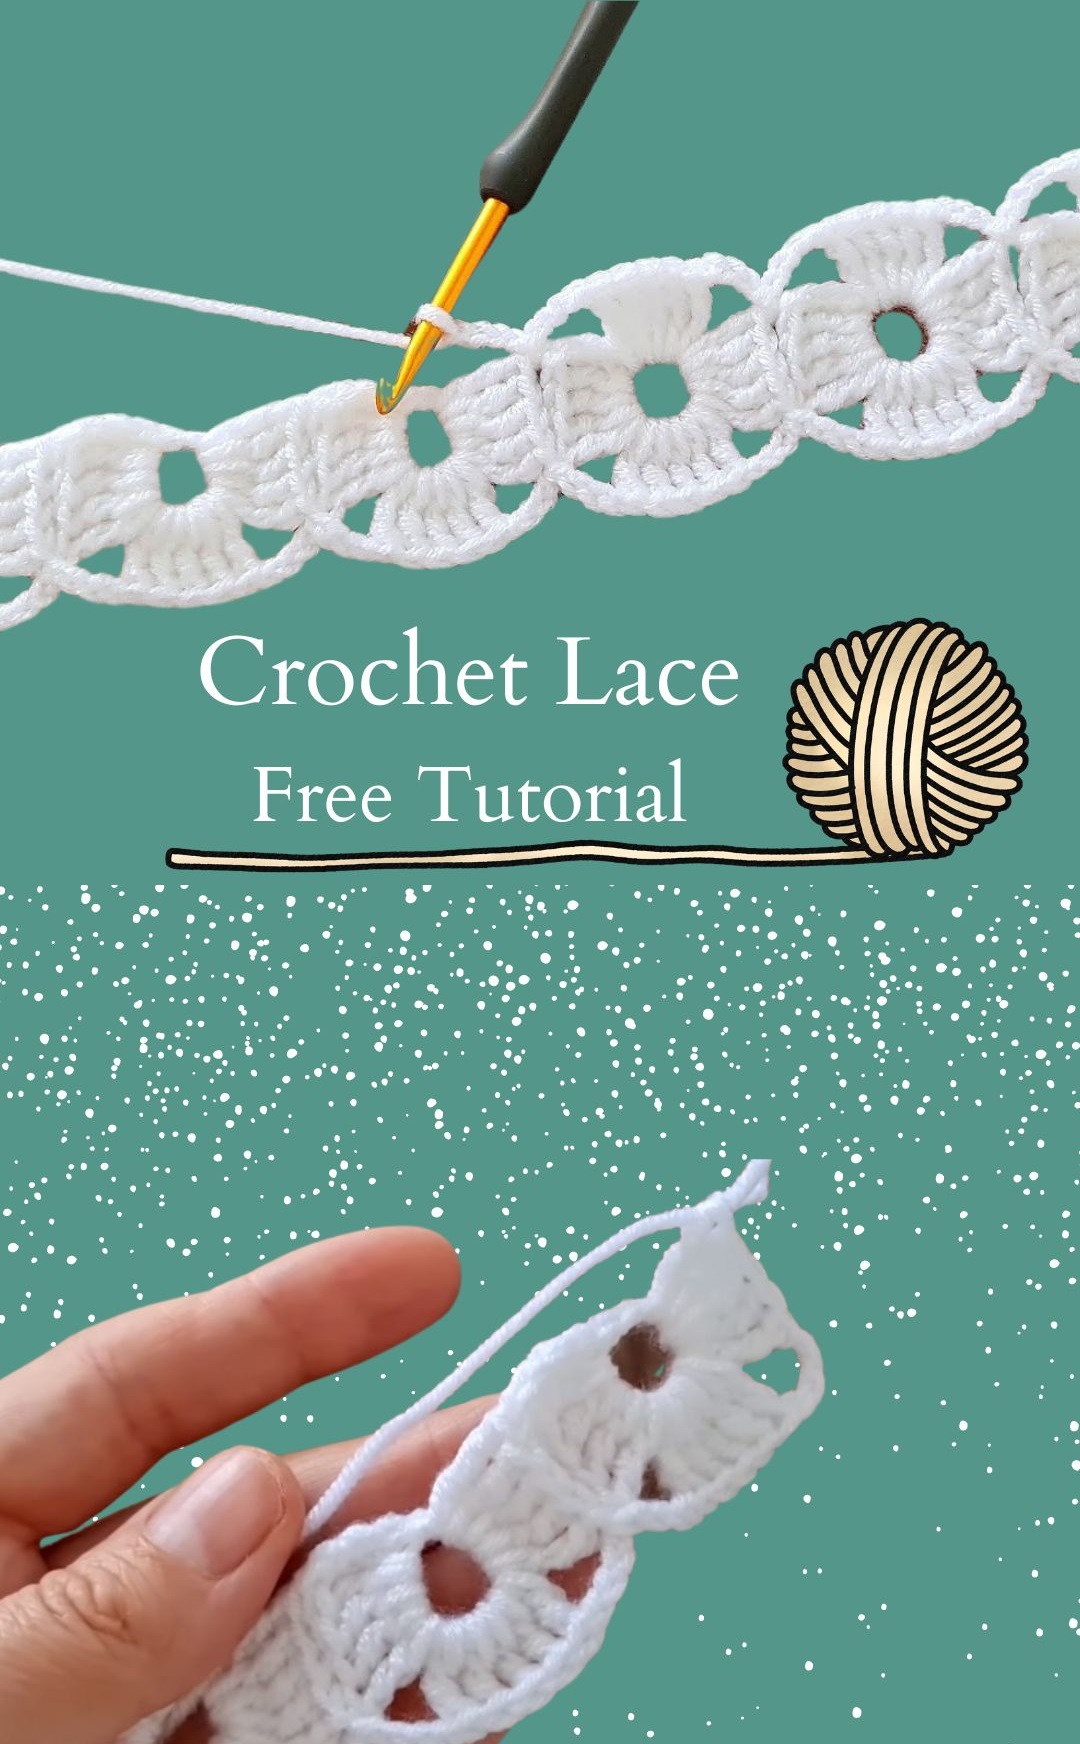 Crochet Lace – Free Tutorial